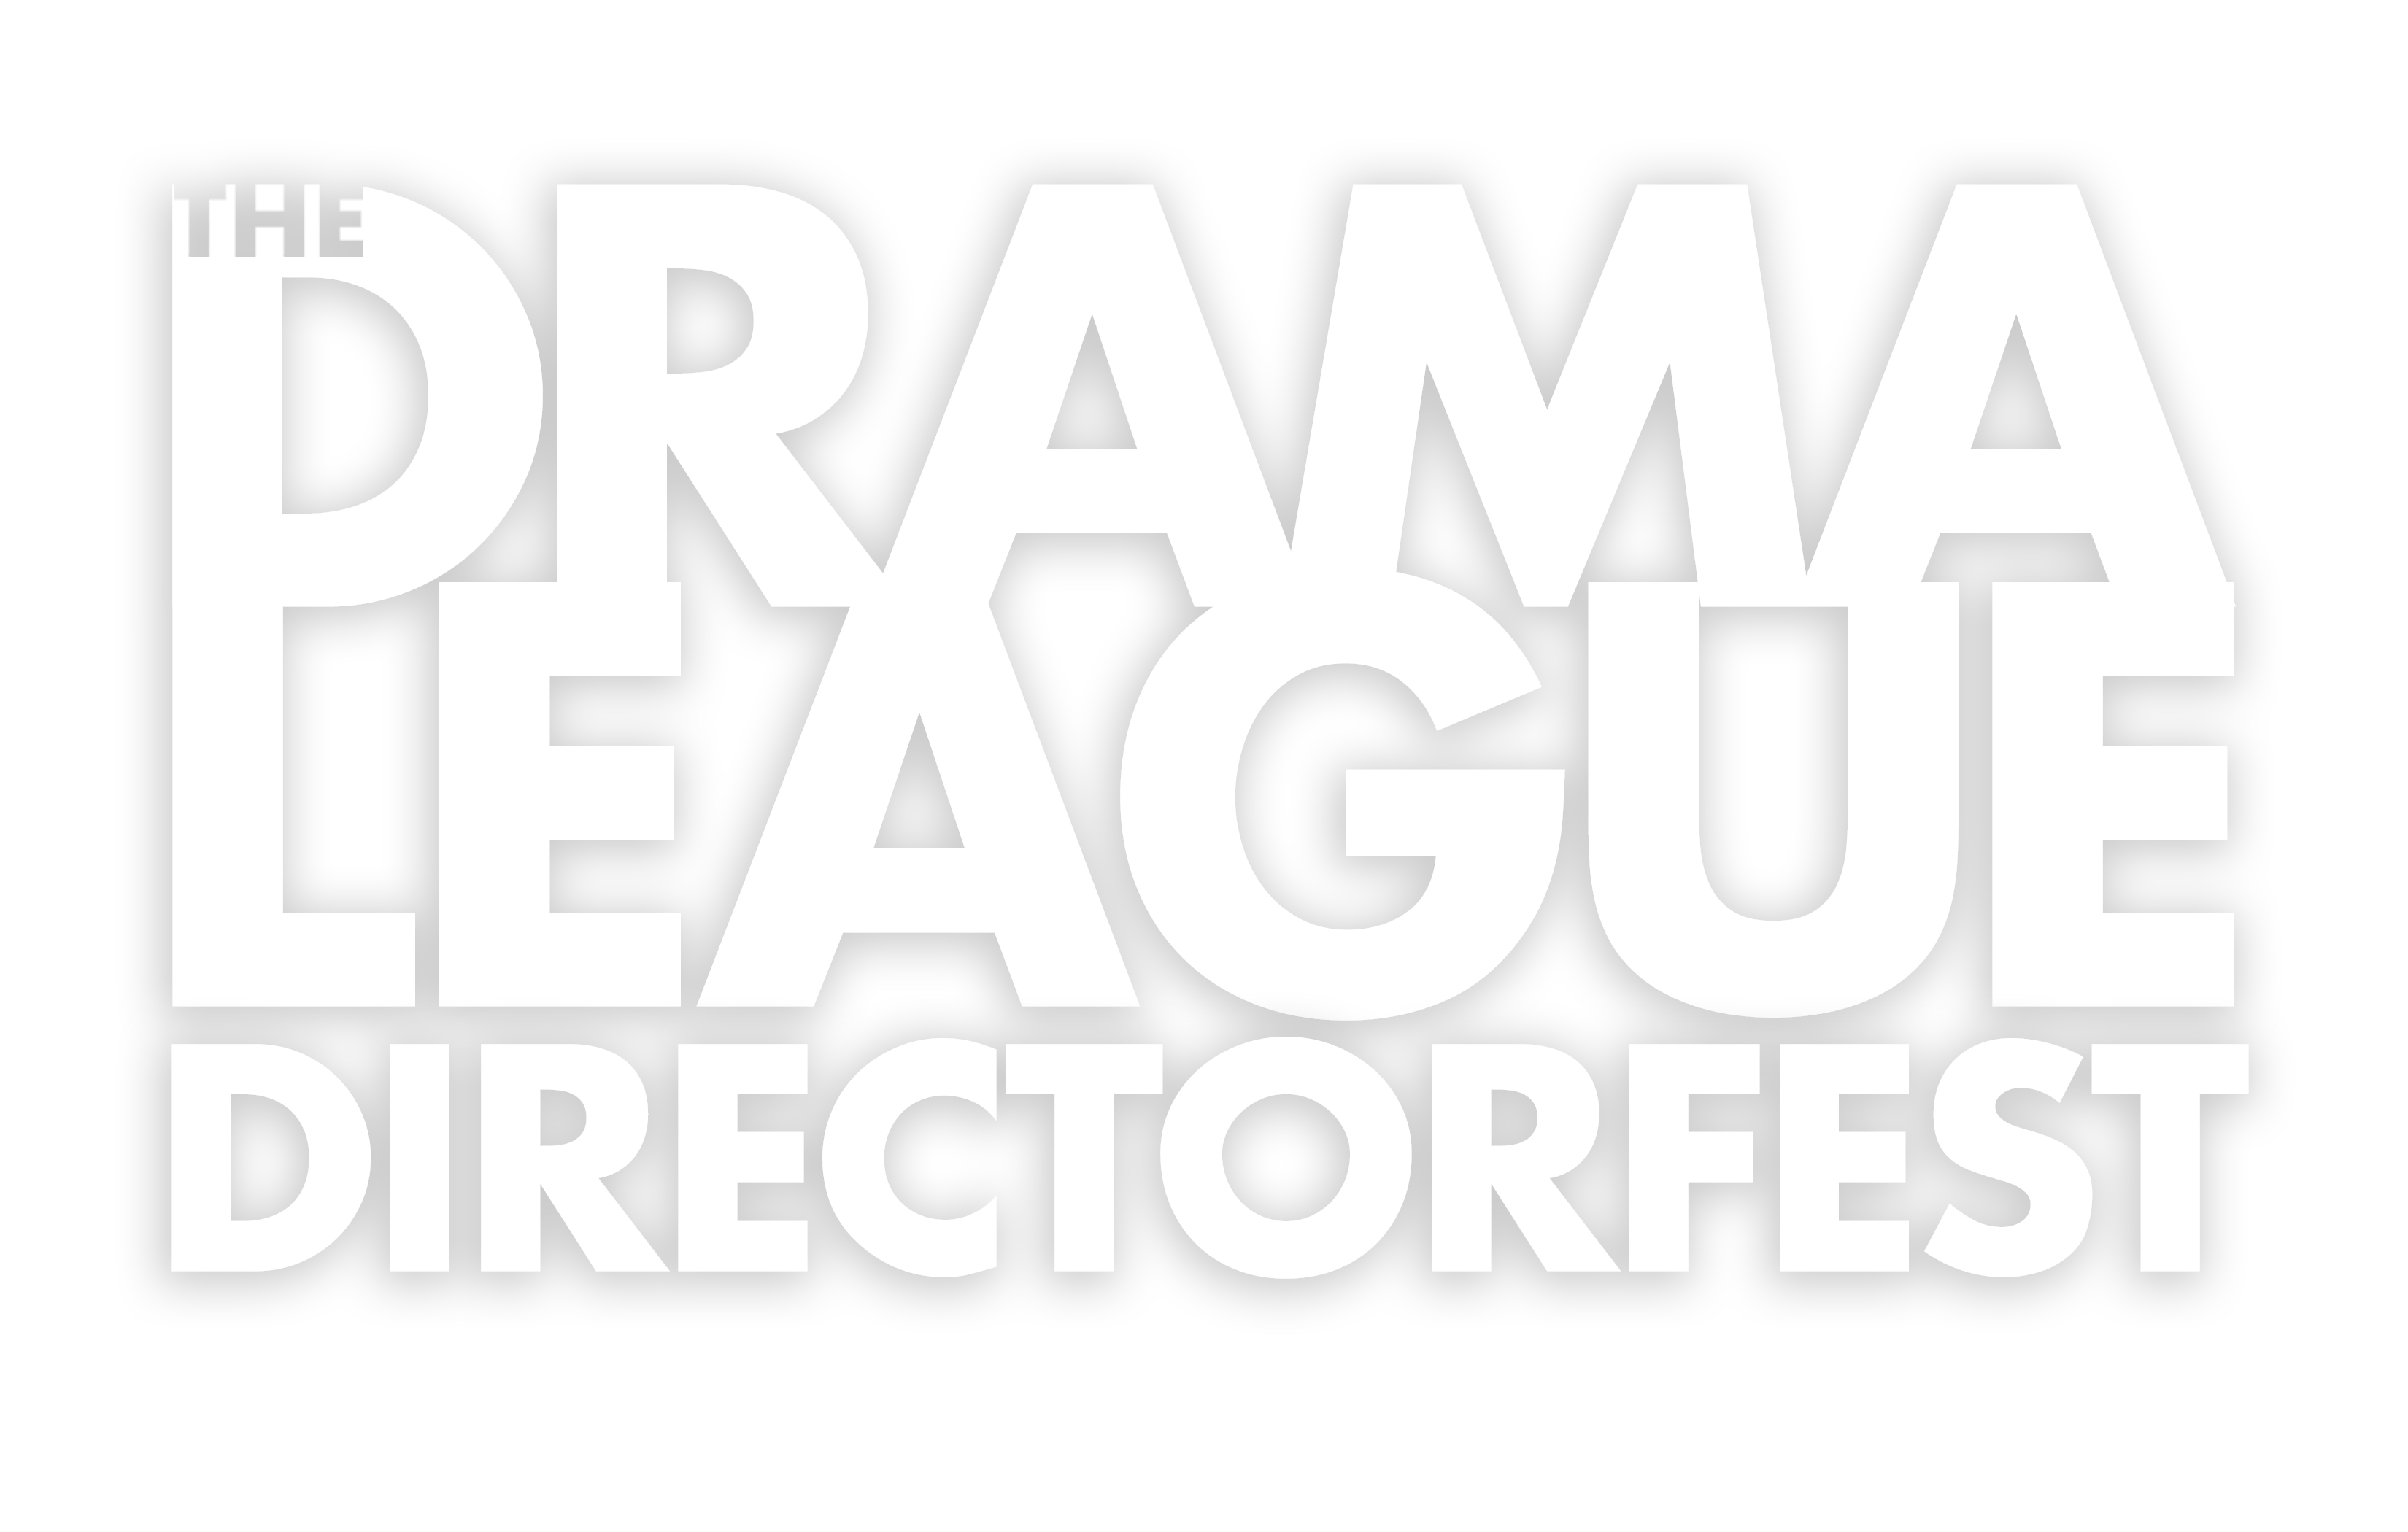 Director Fest